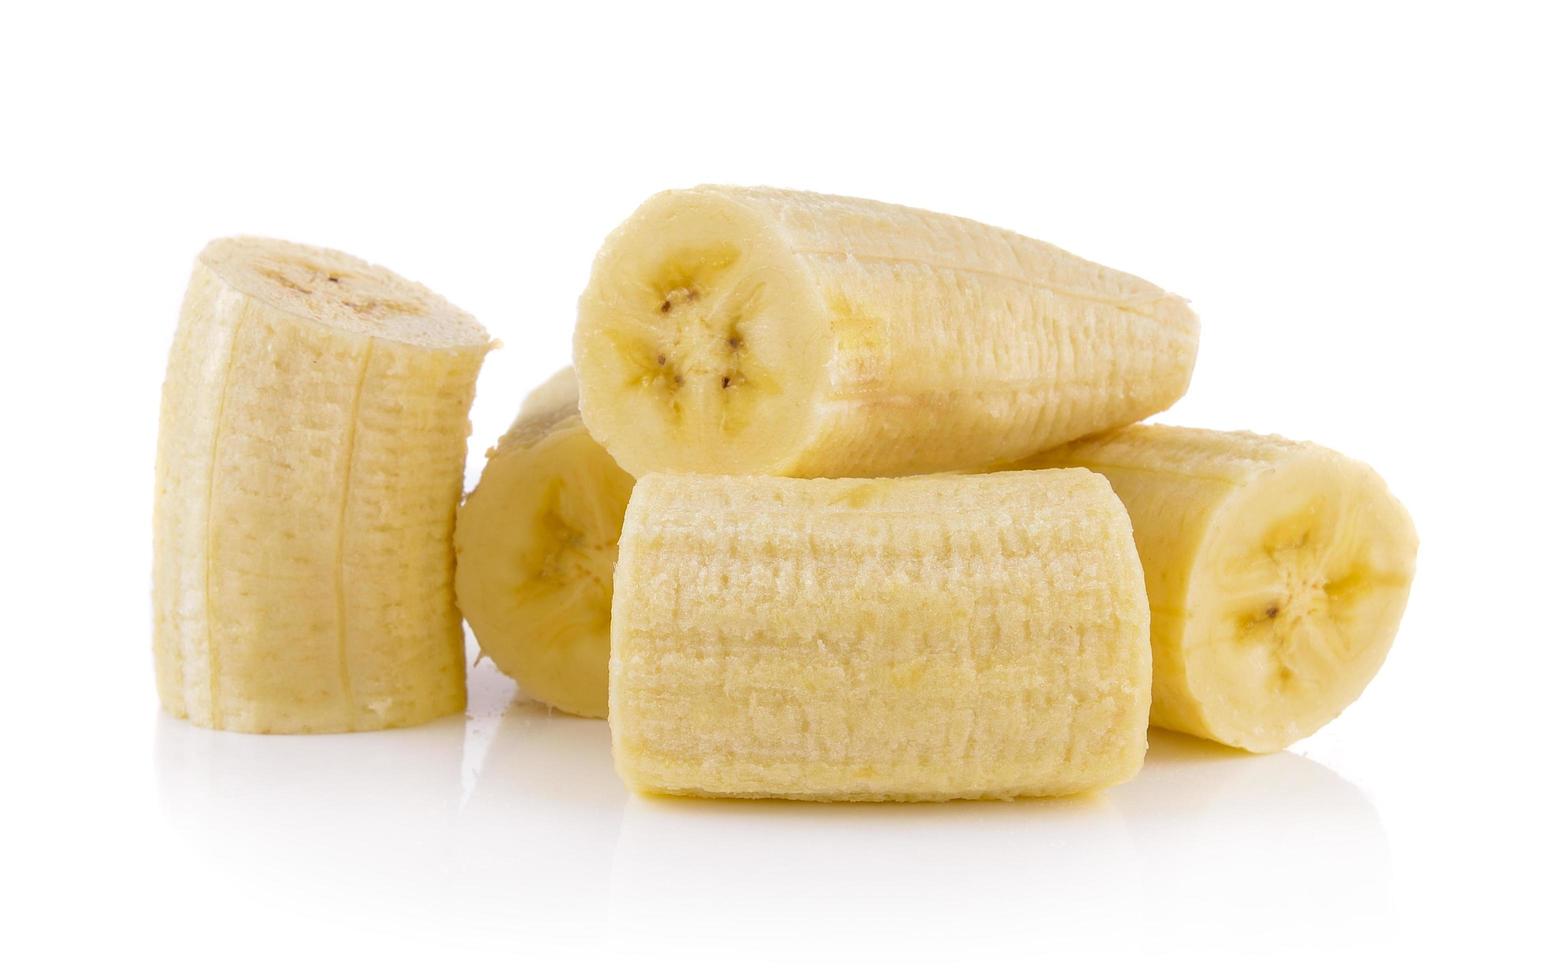 banana em fundo branco foto